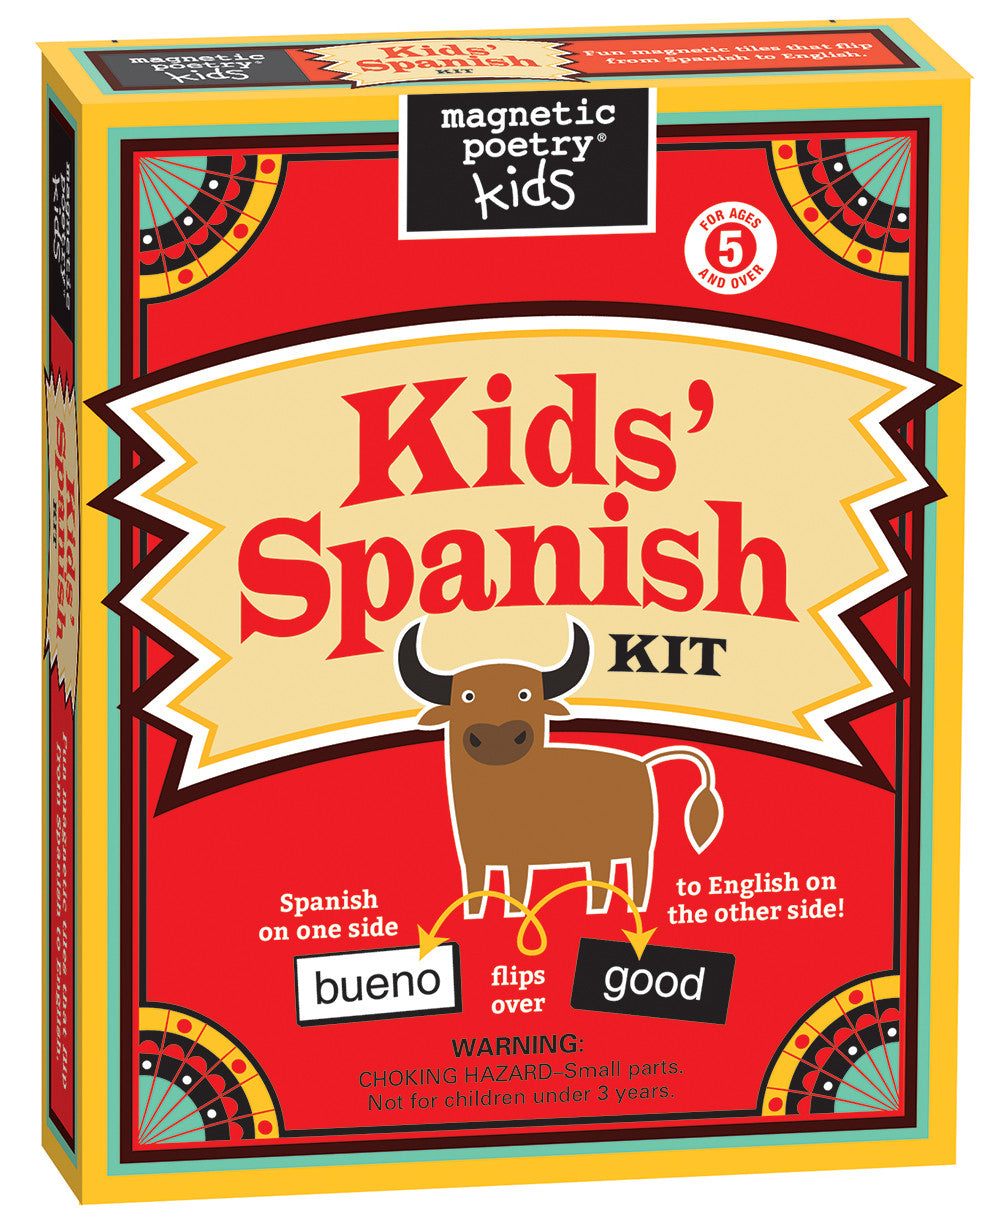 Kids' Spanish Kit – magneticpoetry.com